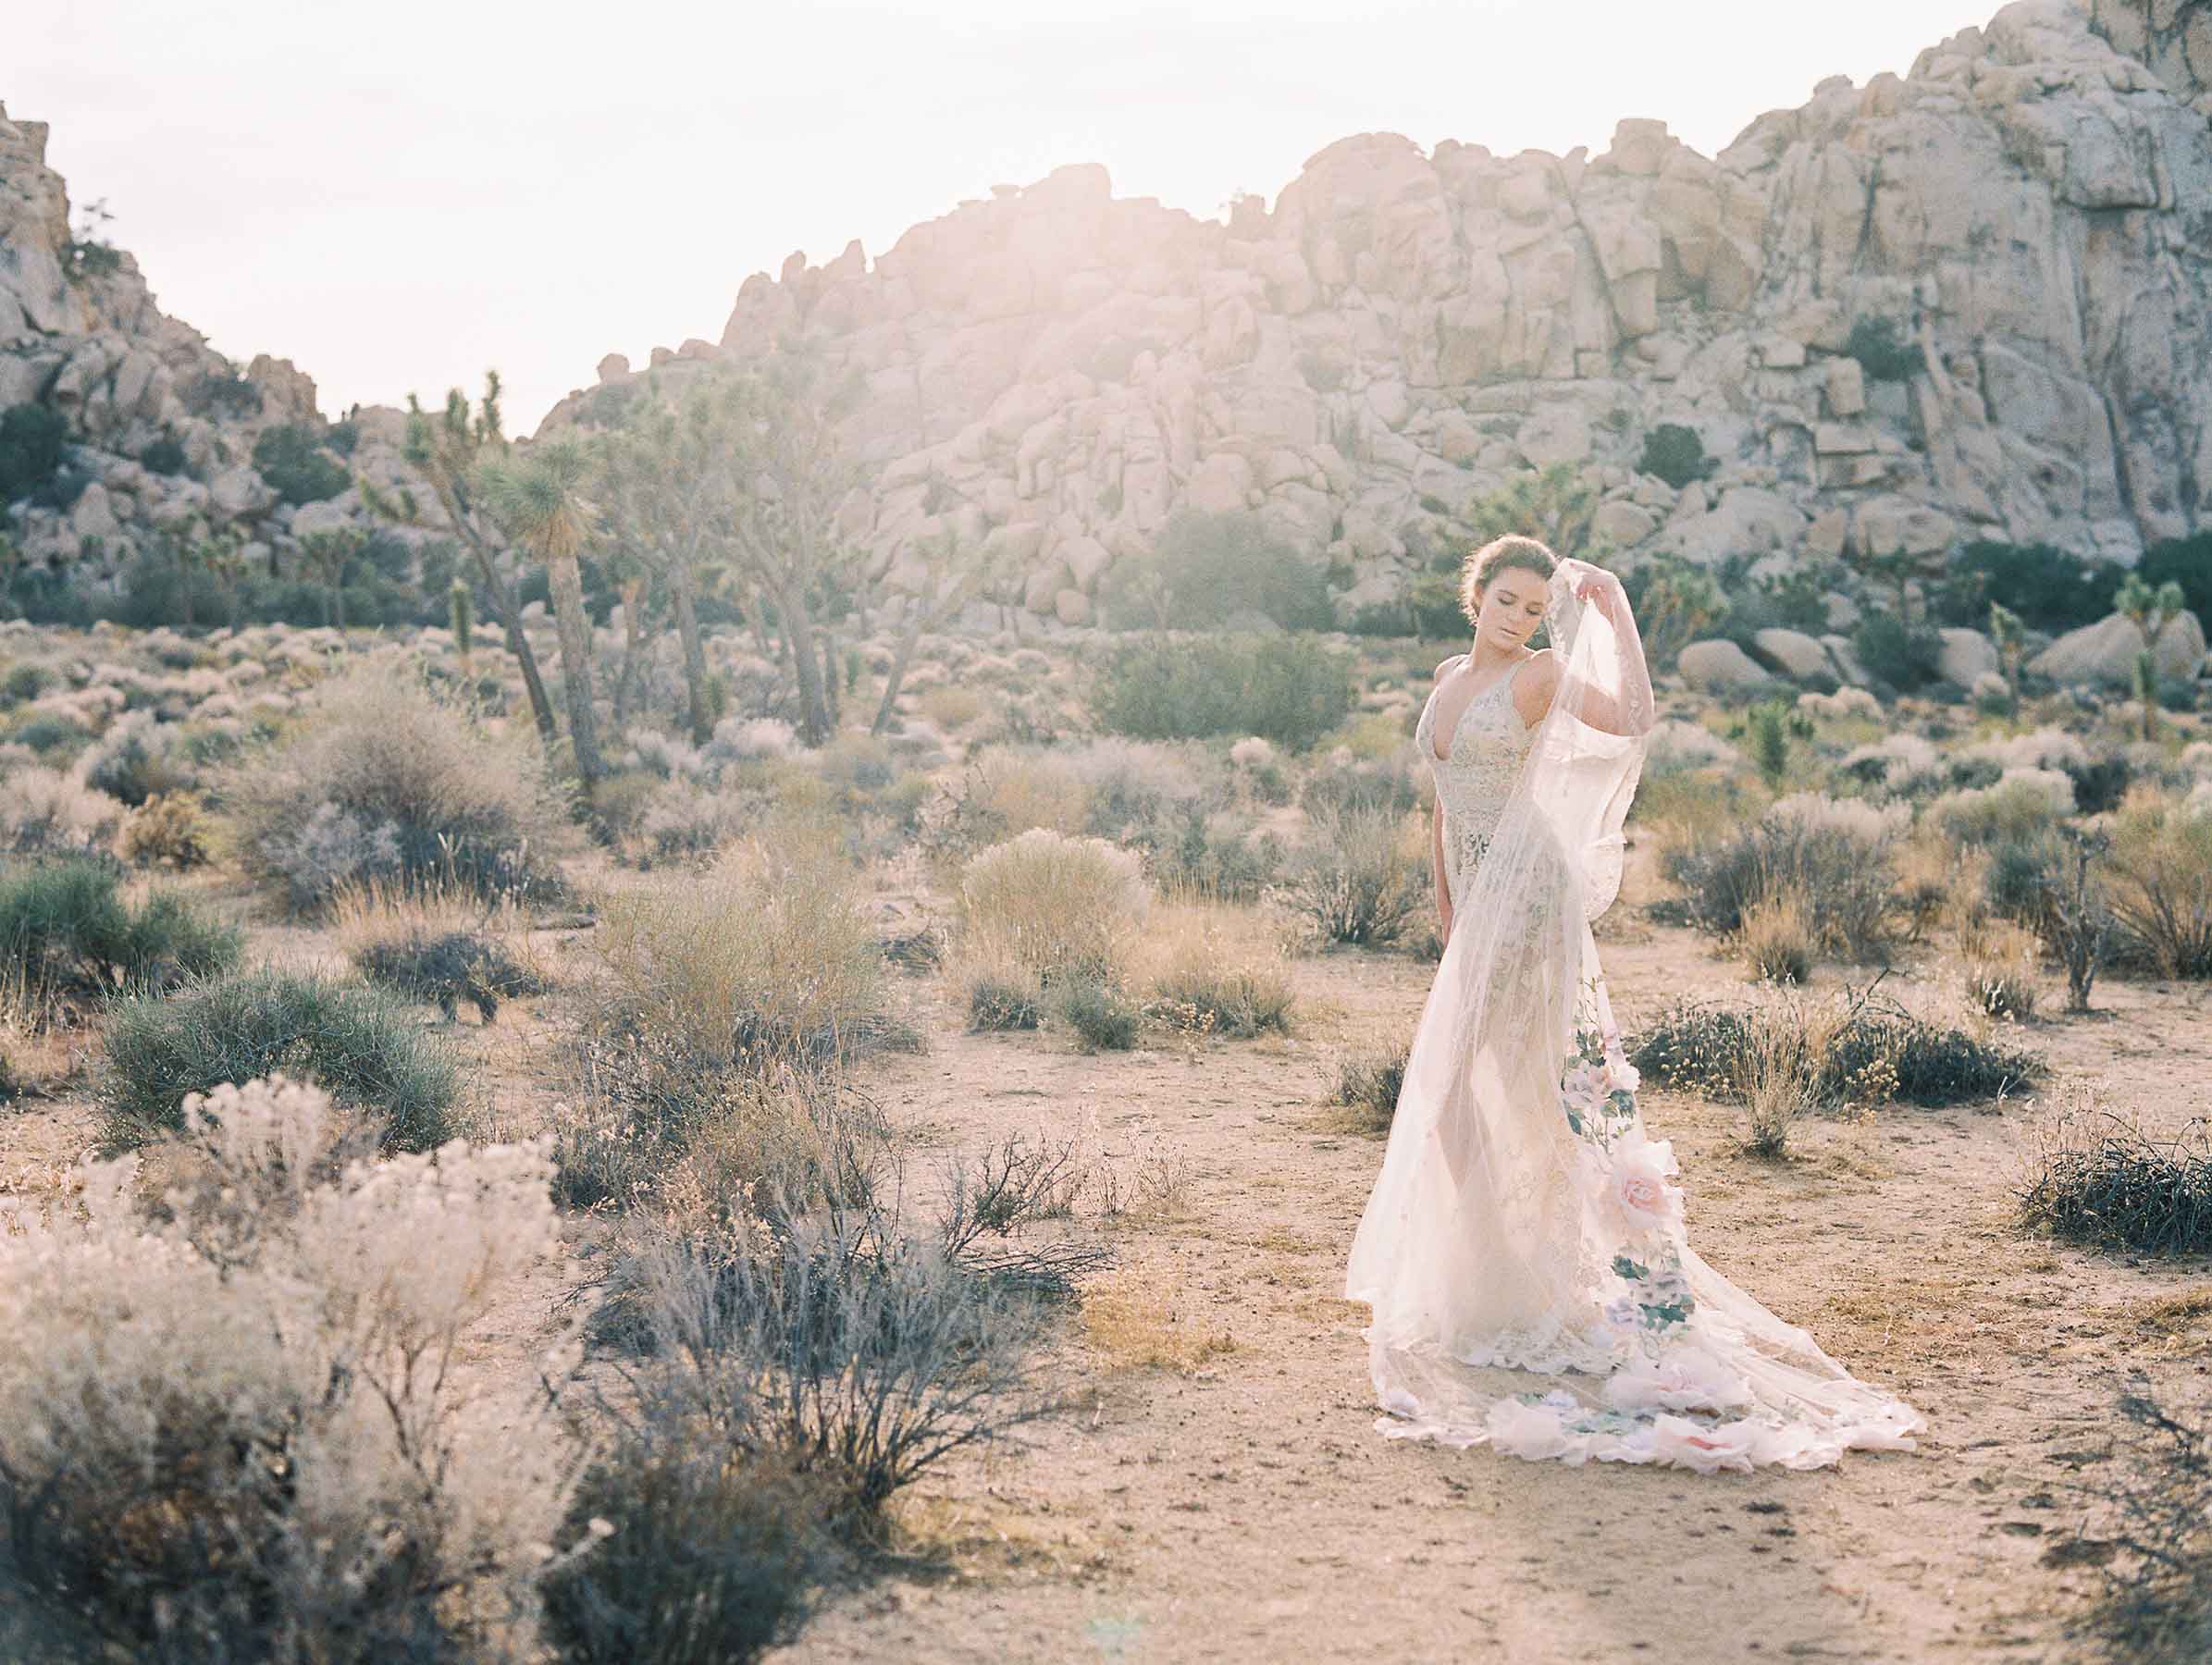 Desert Rose Couture Wedding Dress Design by Claire Pettibone